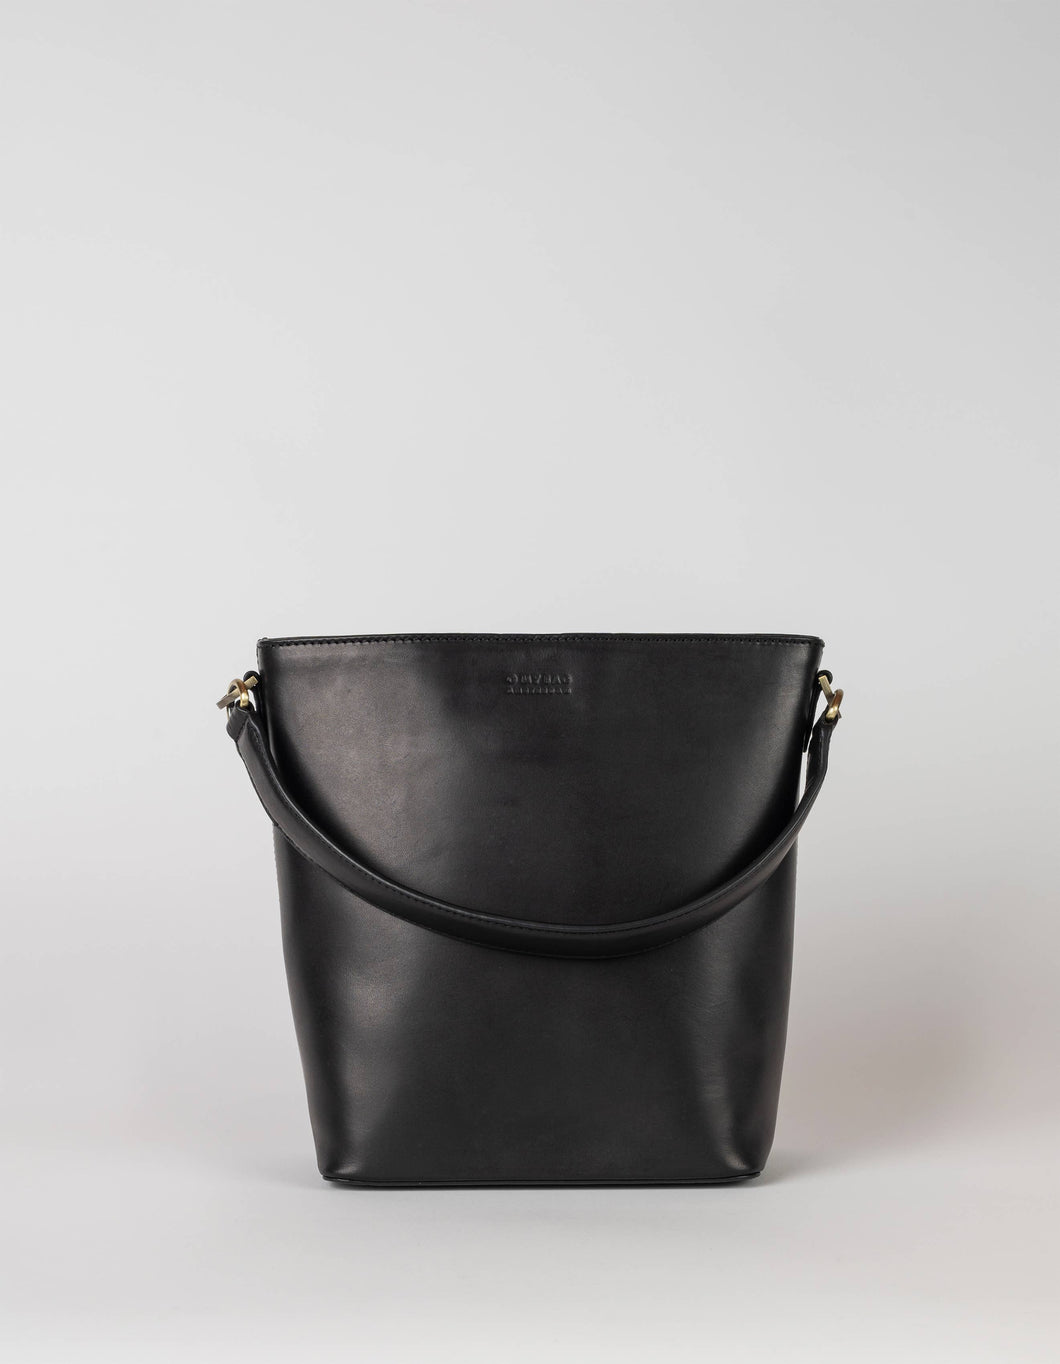 O My Bag - Leather Bag Bobbi Bucket Bag Maxi - Black Classic Leather